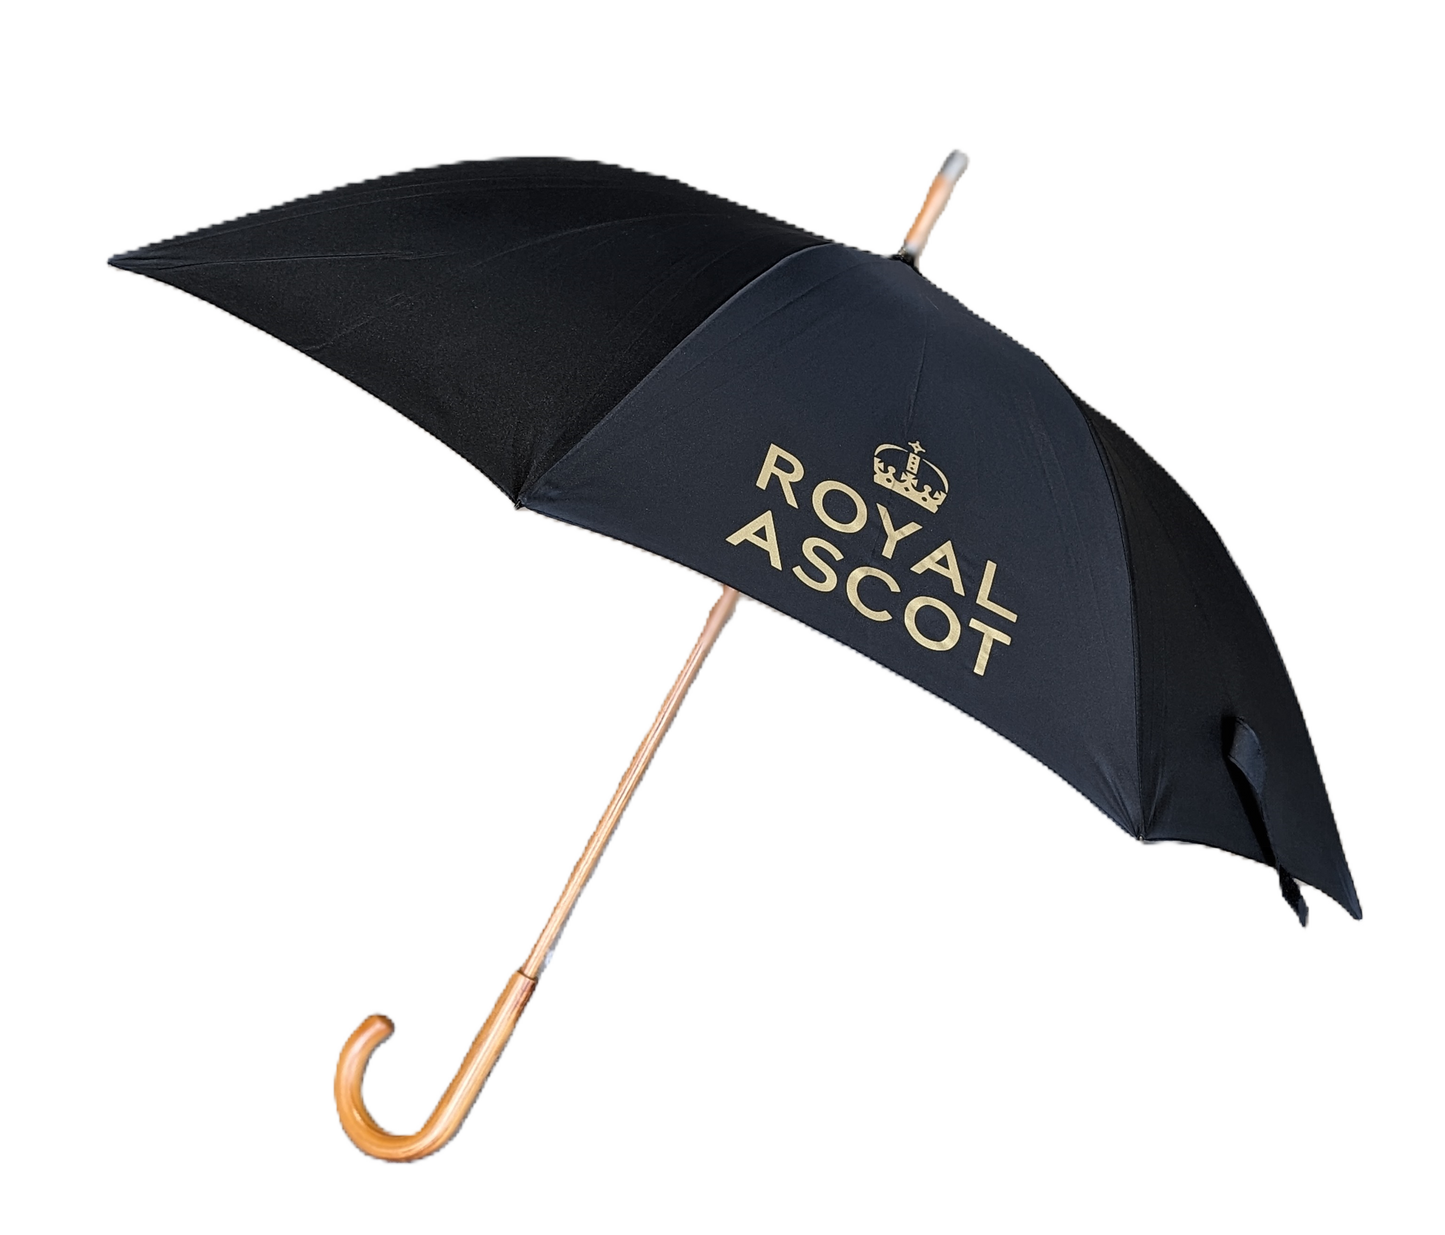 Wooden Handled Umbrella